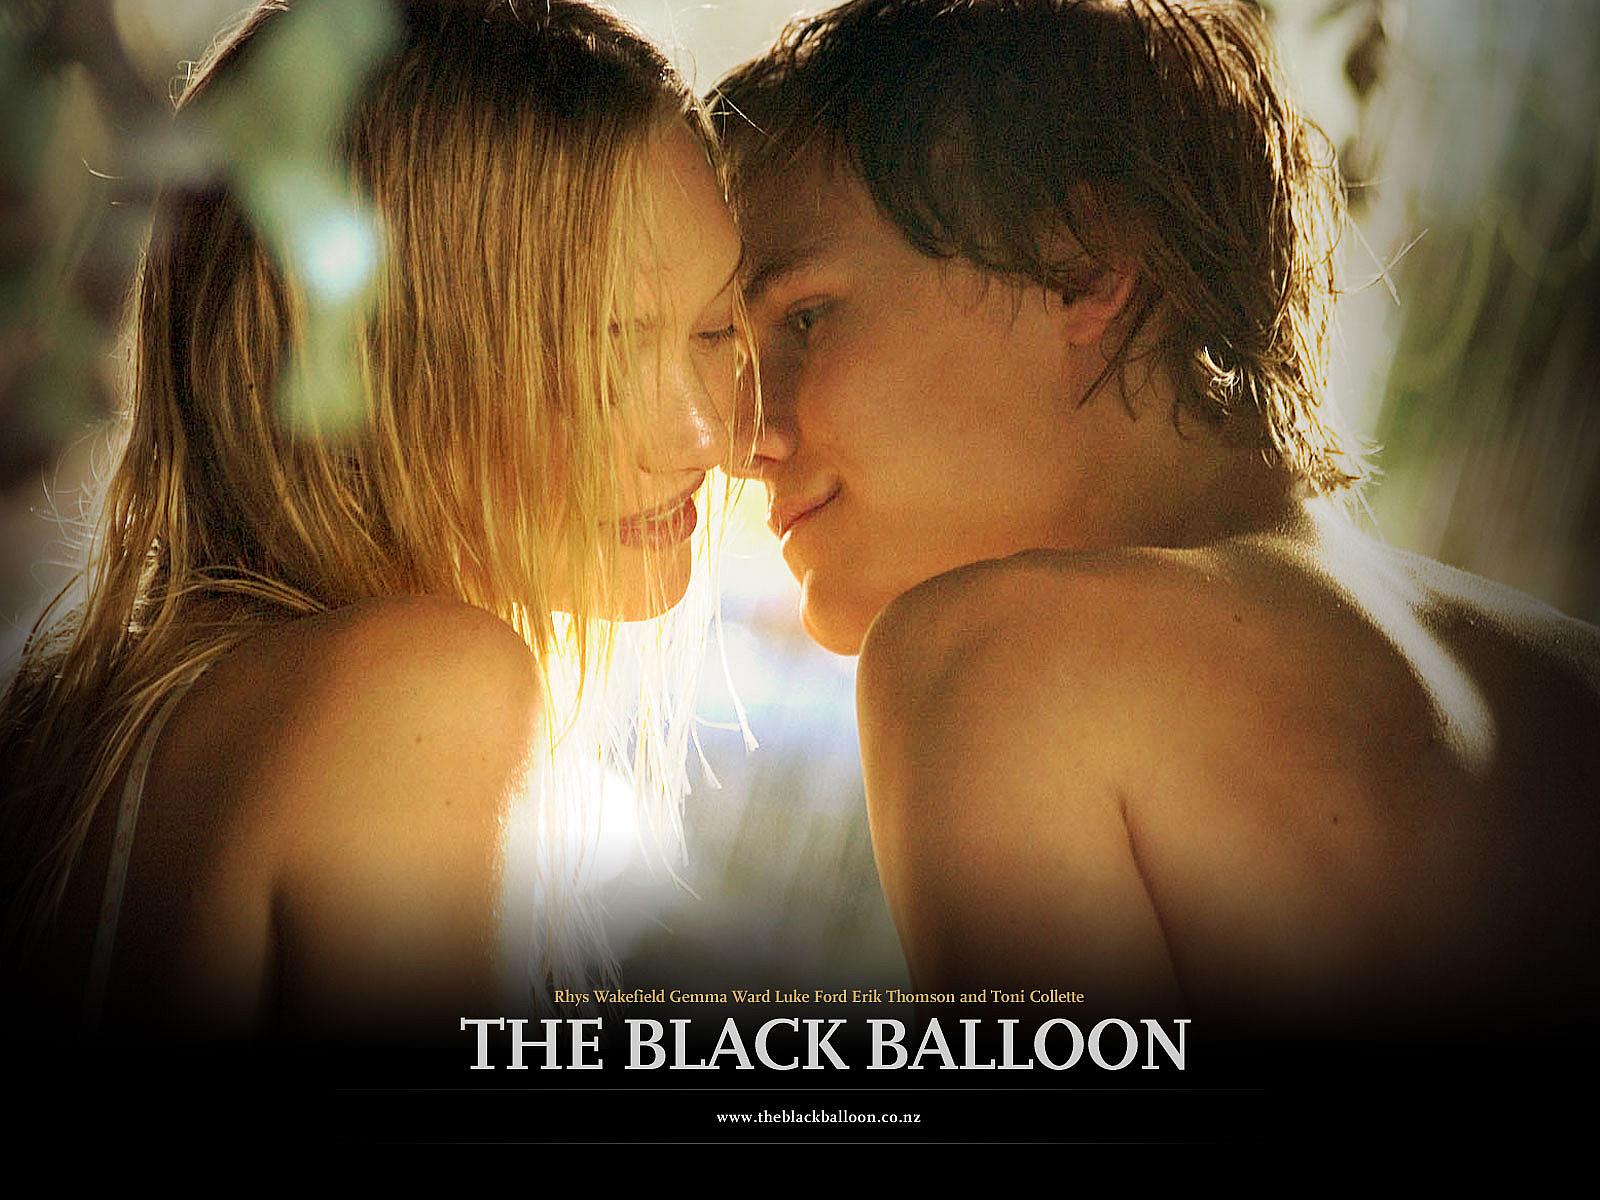 Rhys Wakefield in The Black Balloon